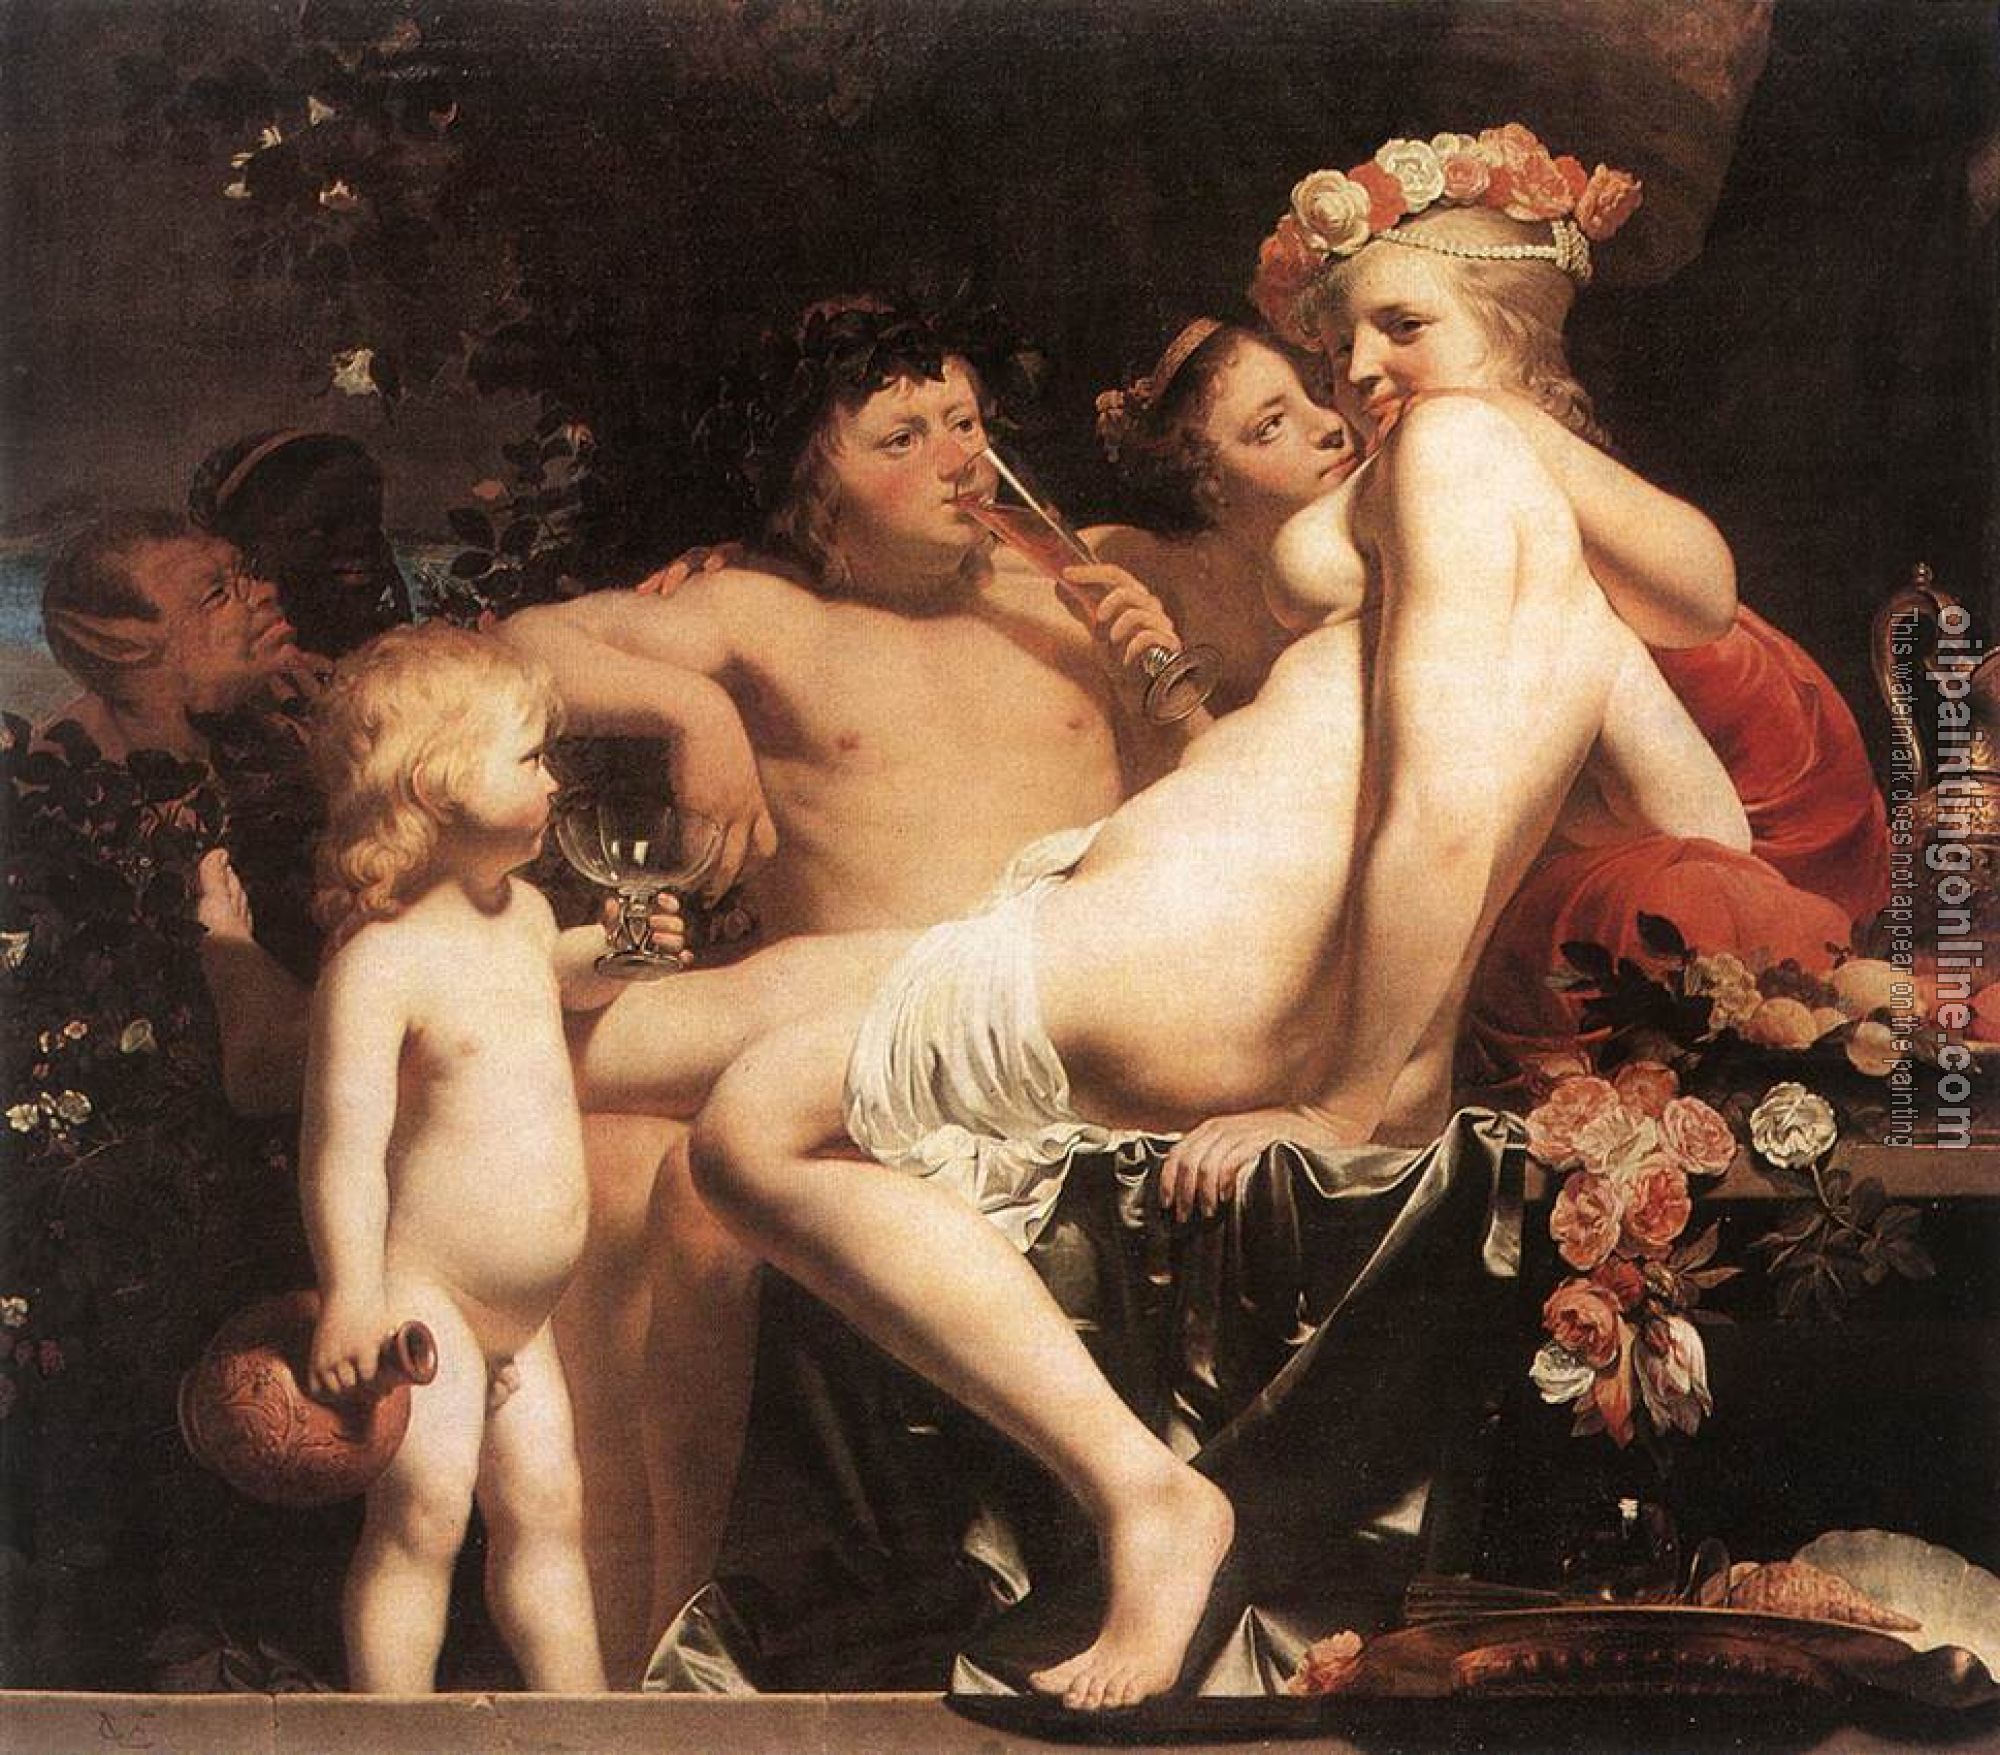 Everdingen, Caesar van - Bacchus with Two Nymphs and Cupid